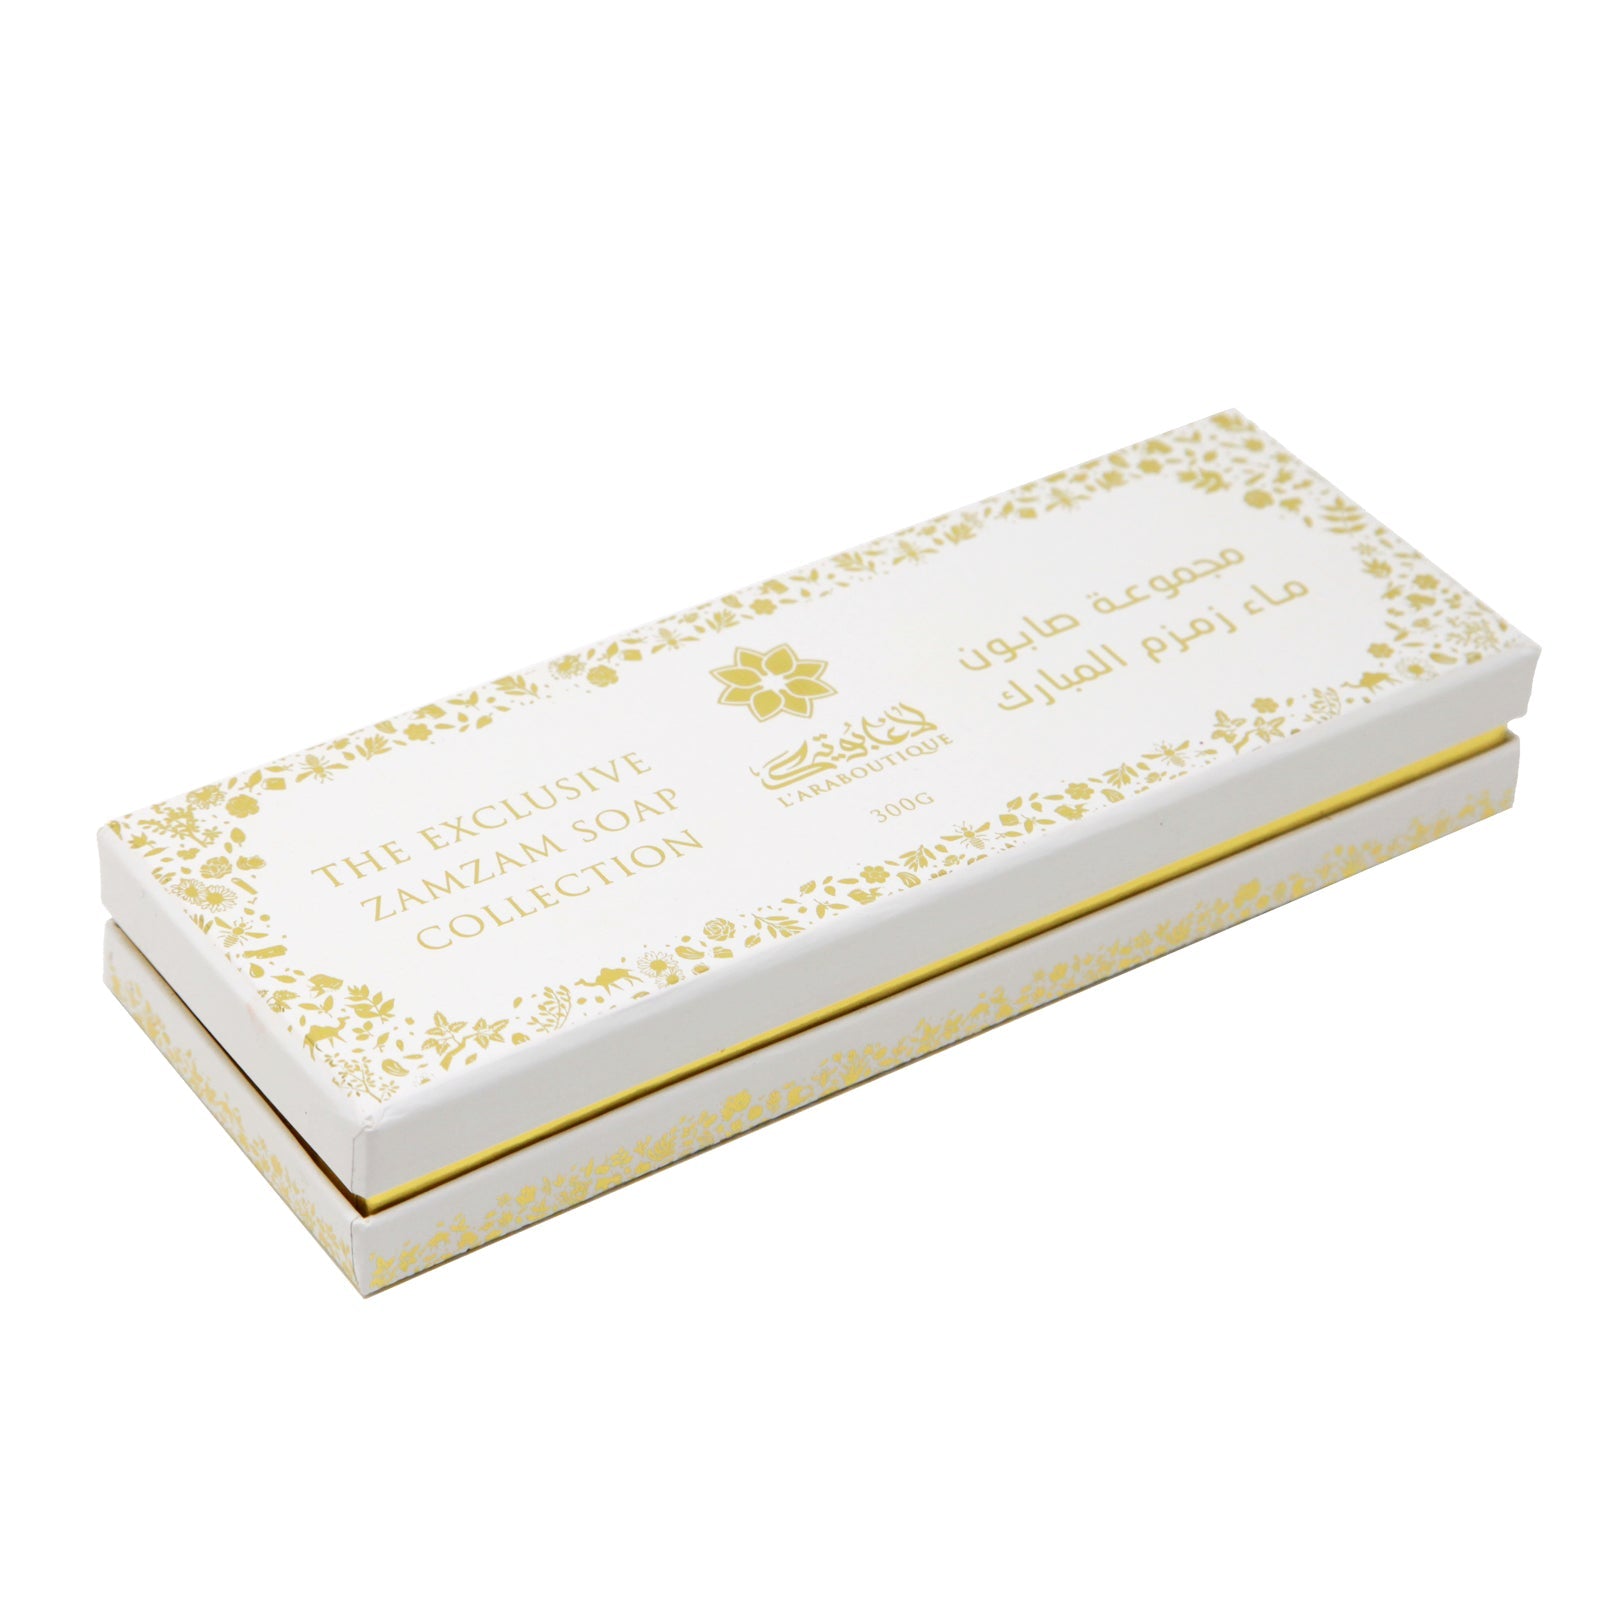 The Luxury Zamzam Soap Collection